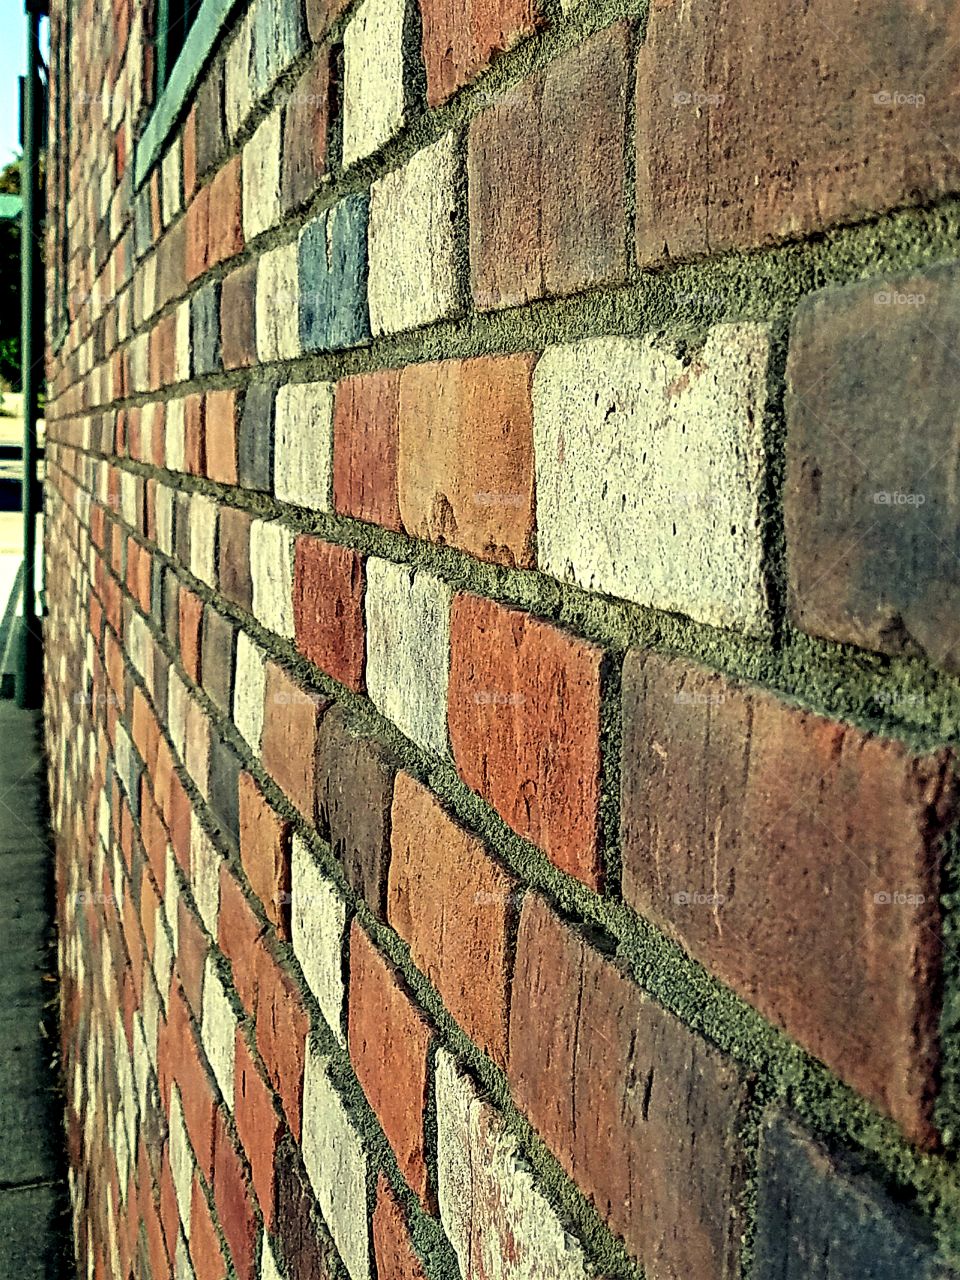 Brick wall in an alleyway.